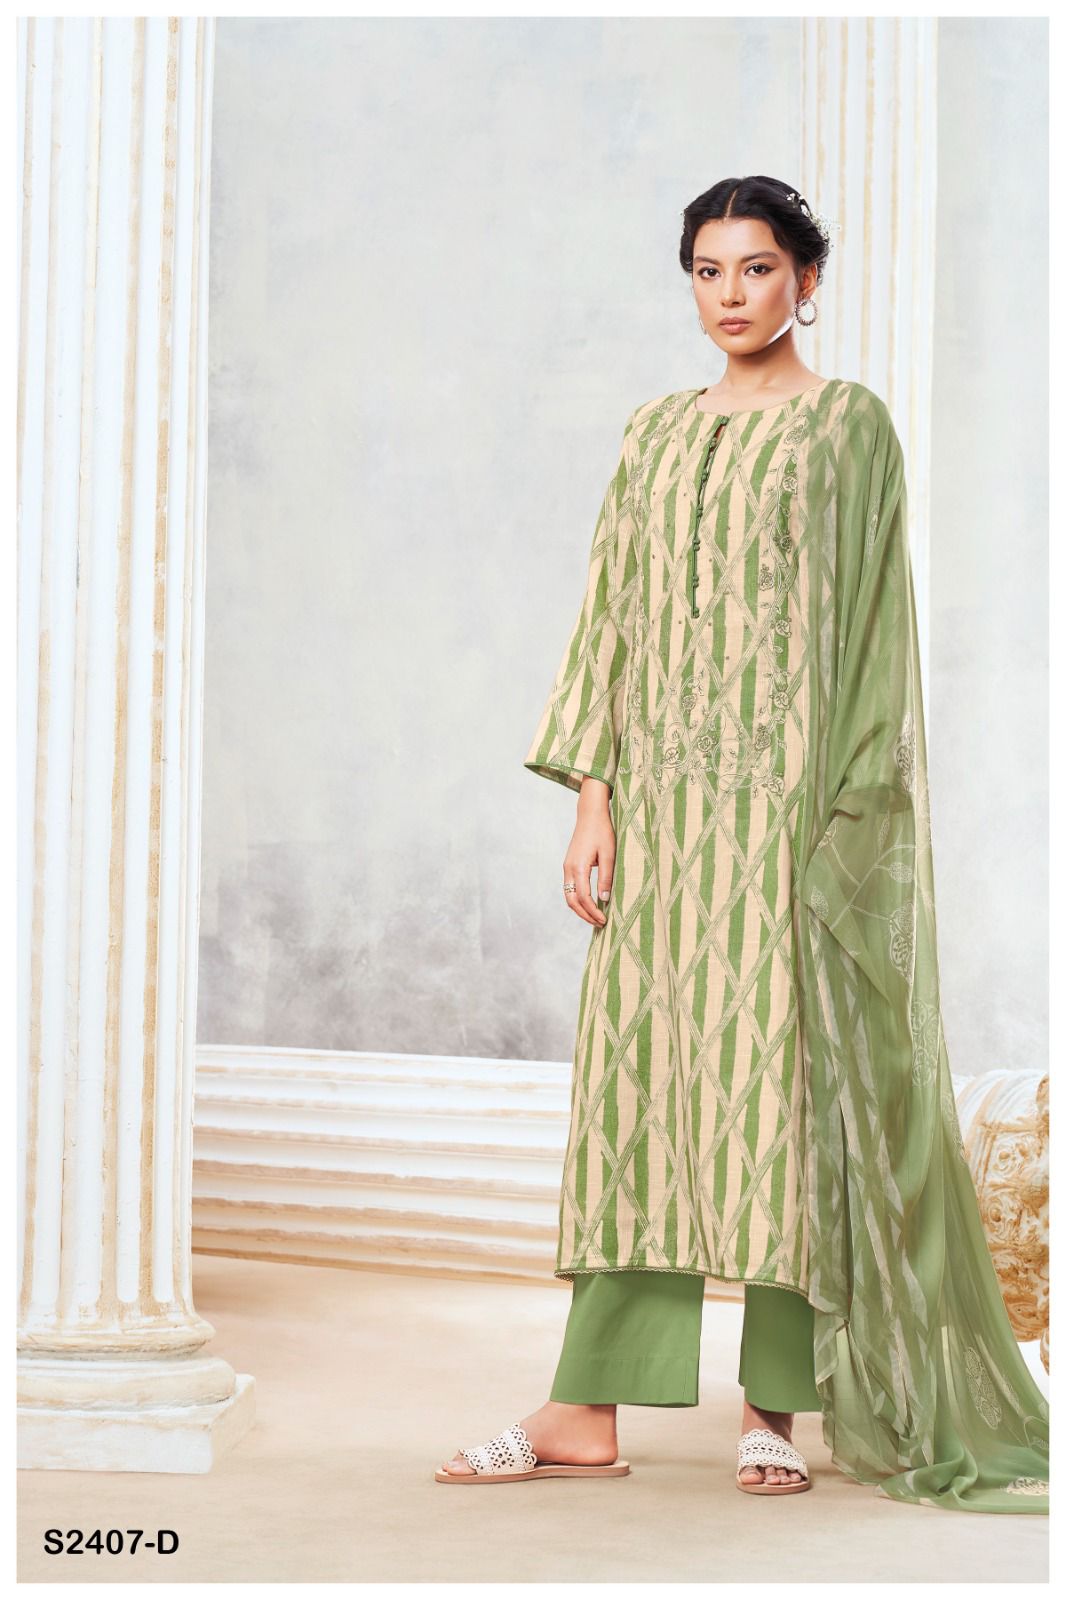 Jisinia 2407 Ganga Cotton Linen Plazzo Style Suits Supplier Ahmedabad